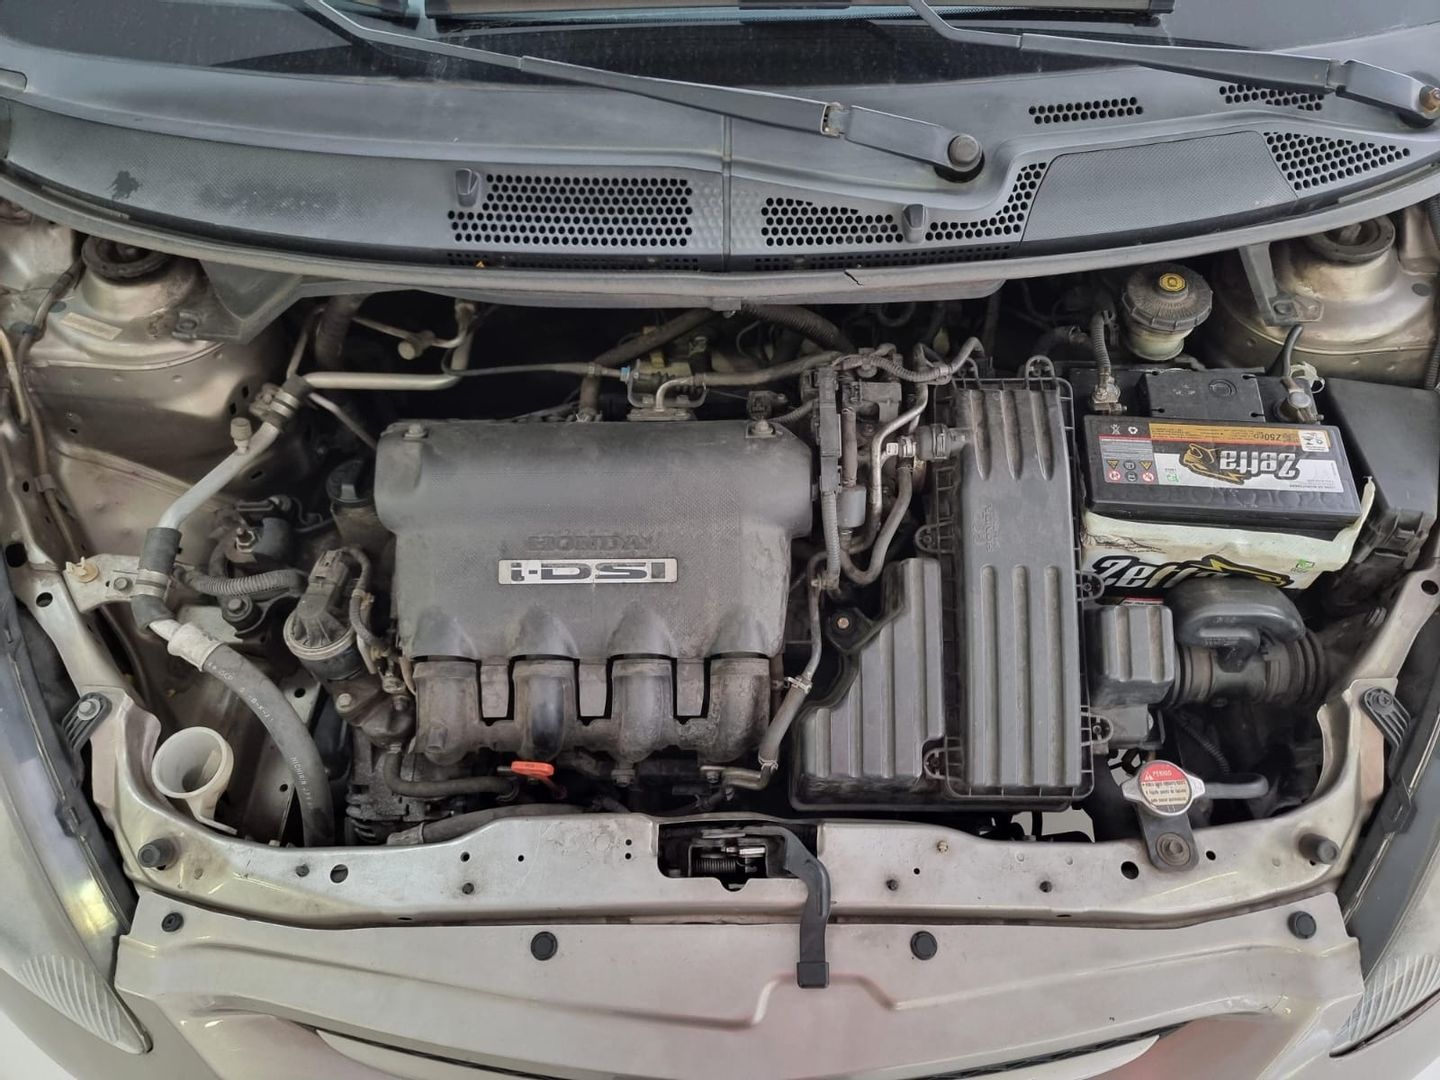 Honda Fit LX 1.4/ 1.4 Flex 8V/16V 5p Aut.